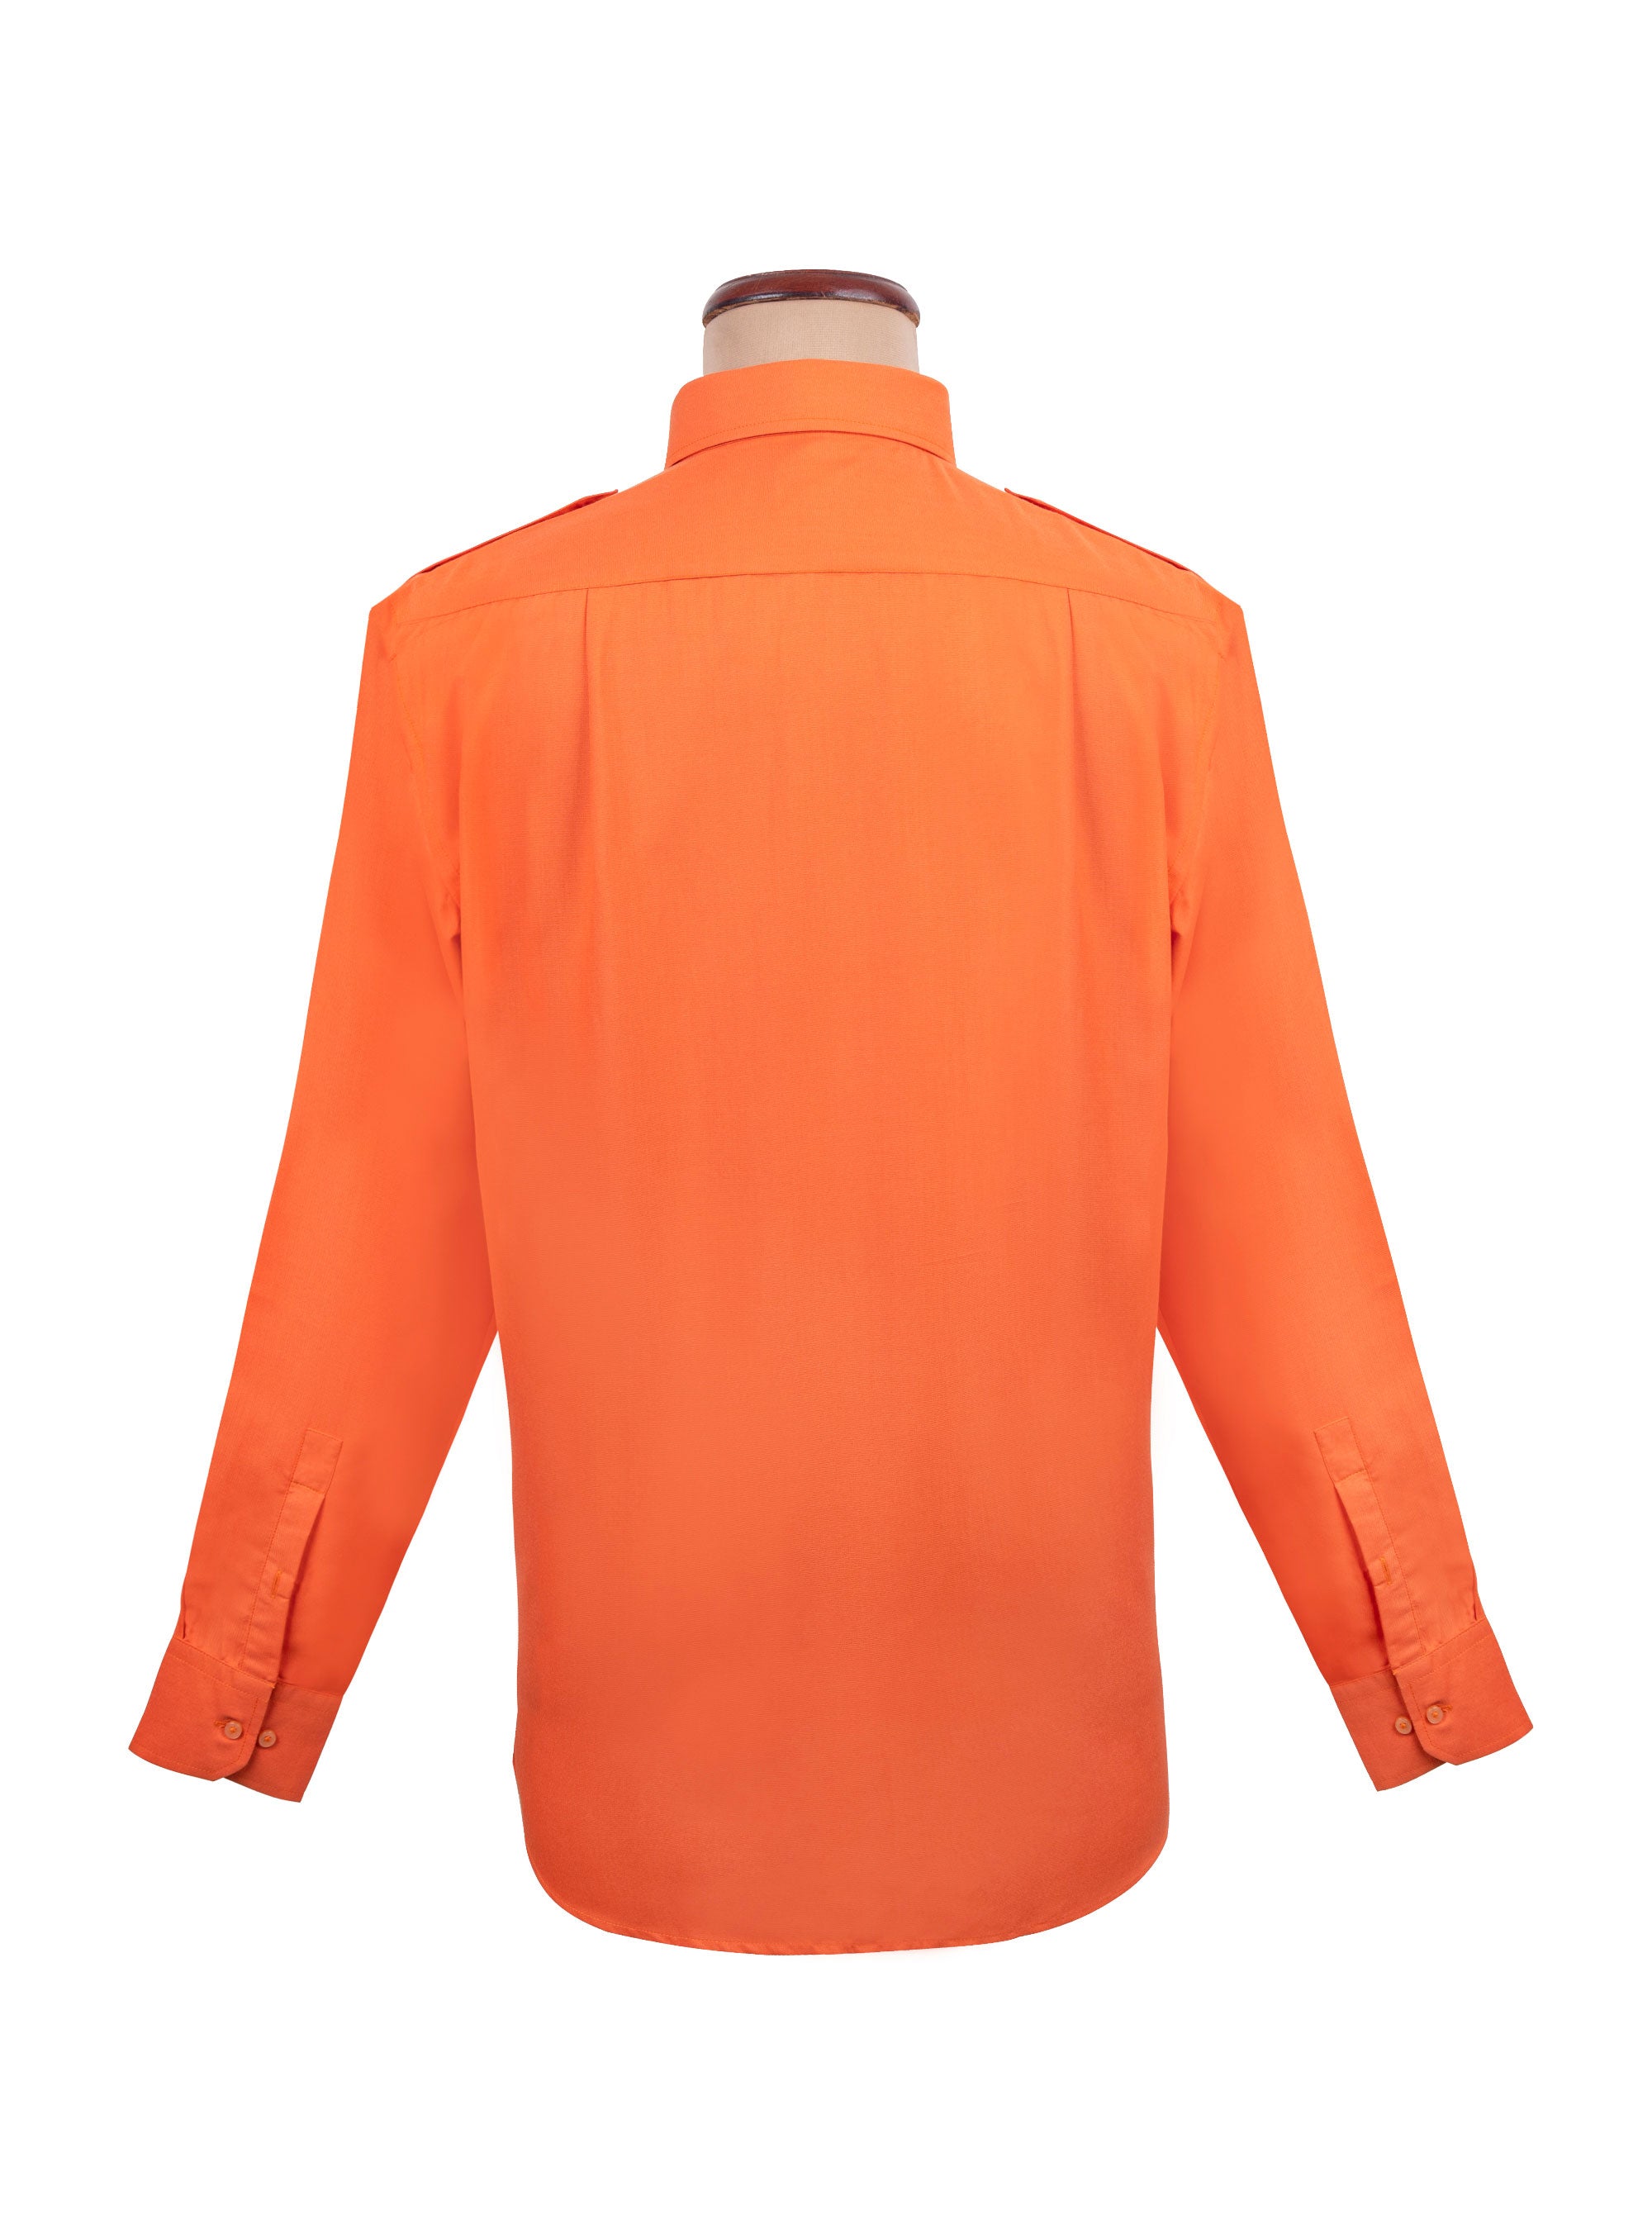 Custom Orange Pilot Shirt Men